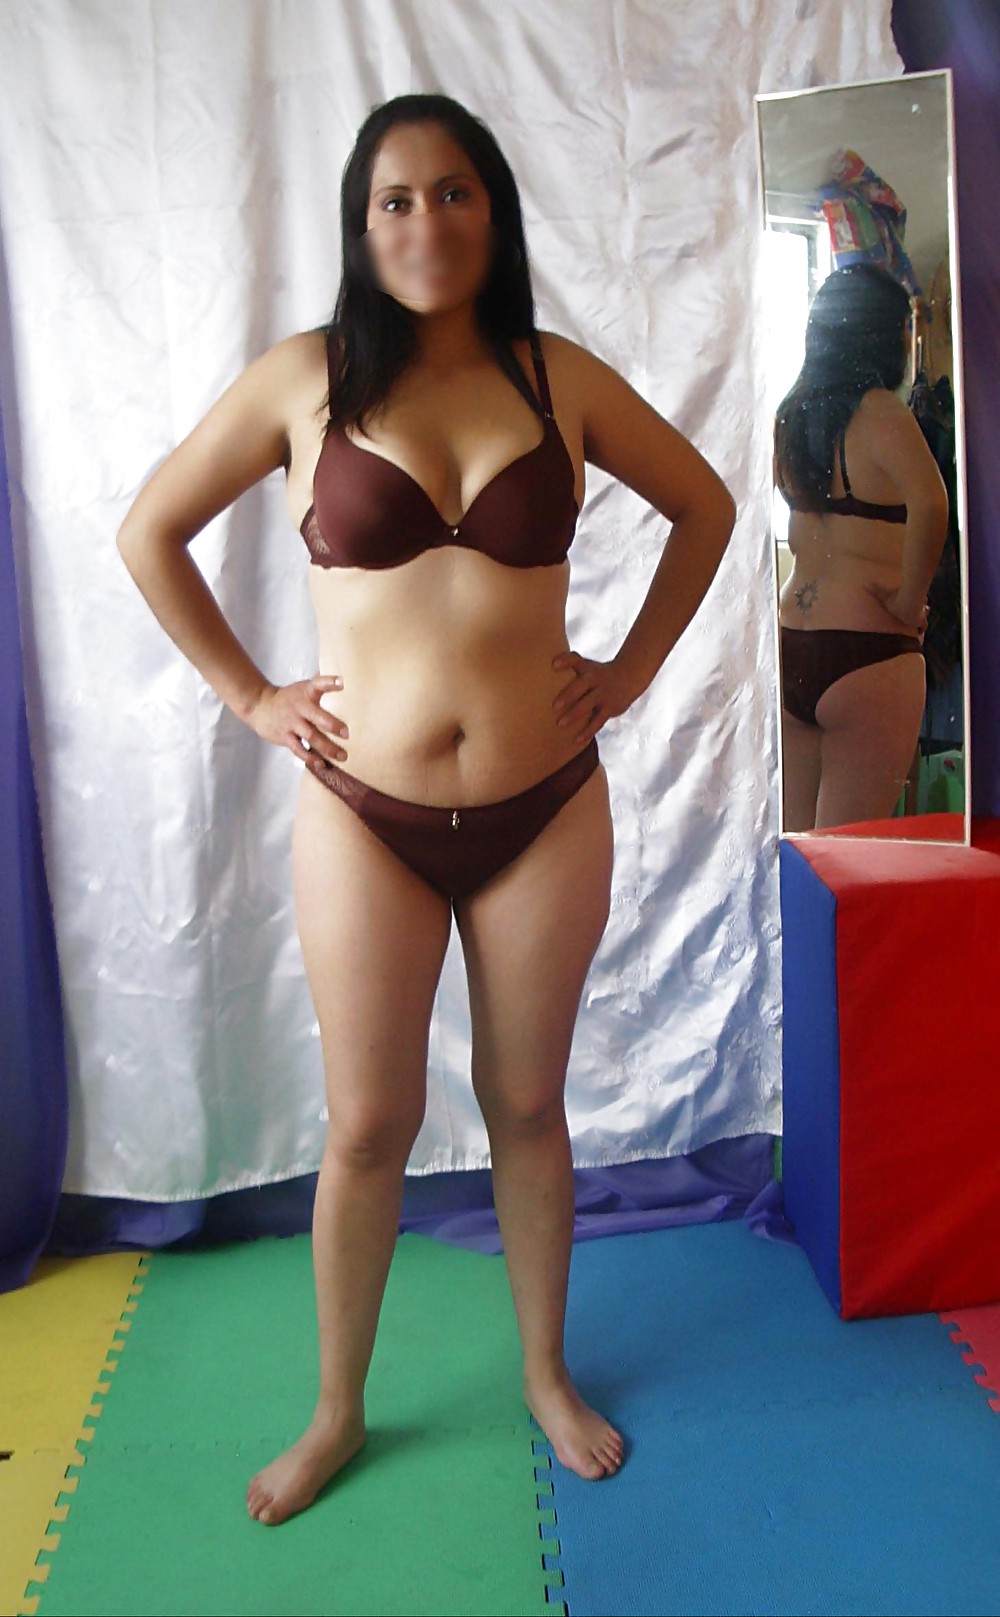 Amateur latina models her bra and panty #24599242